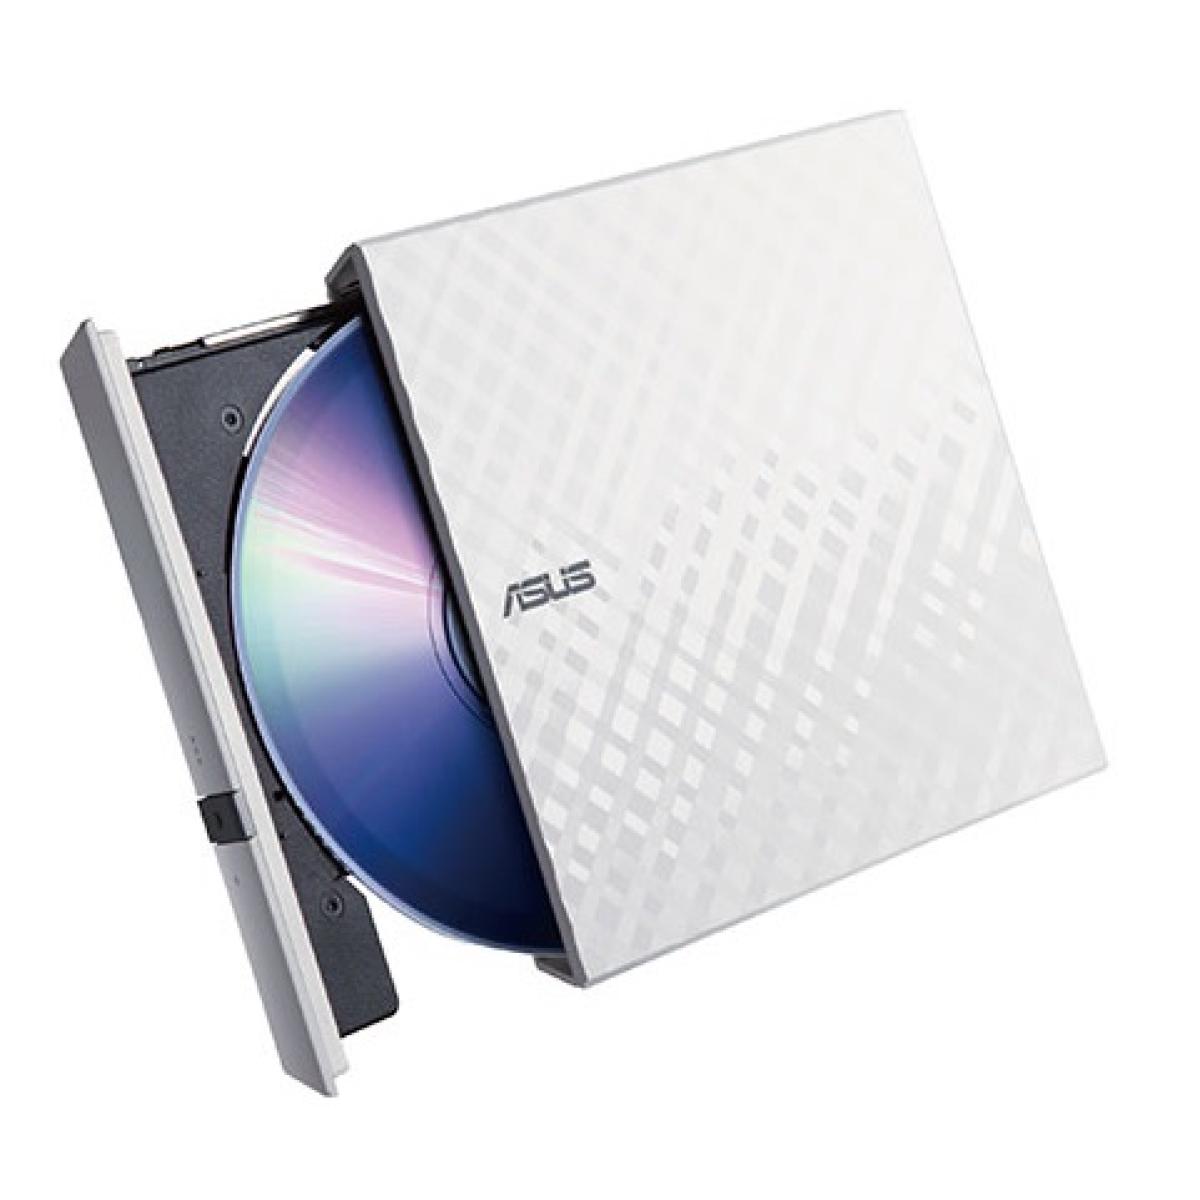 ASUS LITE Portable USB 2.0 Slim 8X DVD/ Burner +/- Rewriter External Drive, Compatible with both Mac & Windows, White